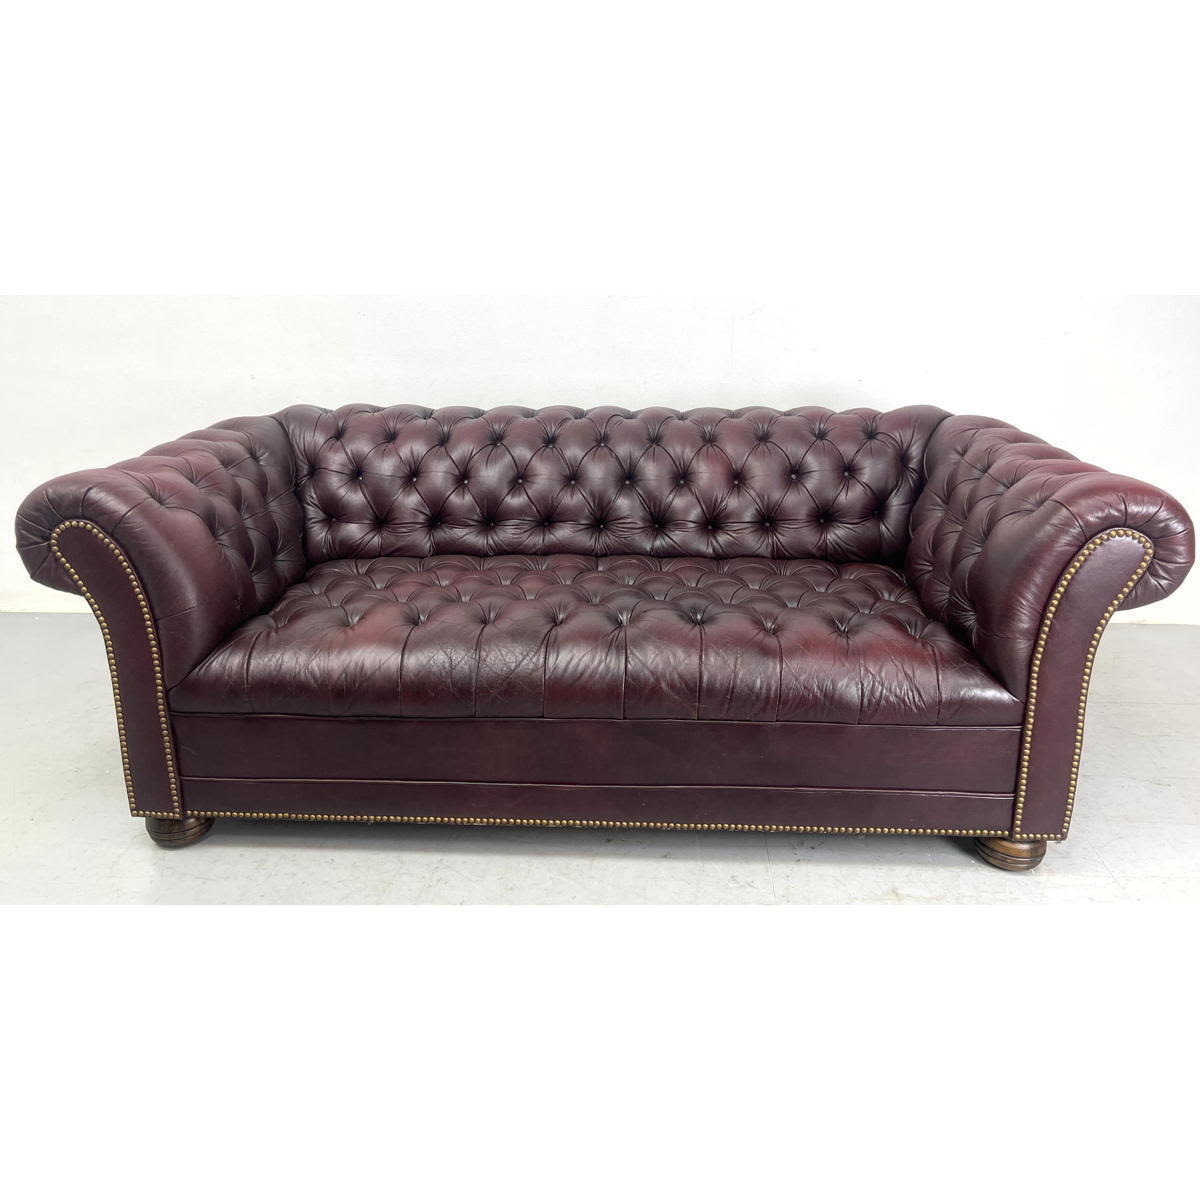 Burgundy leather Chesterfield Sofa